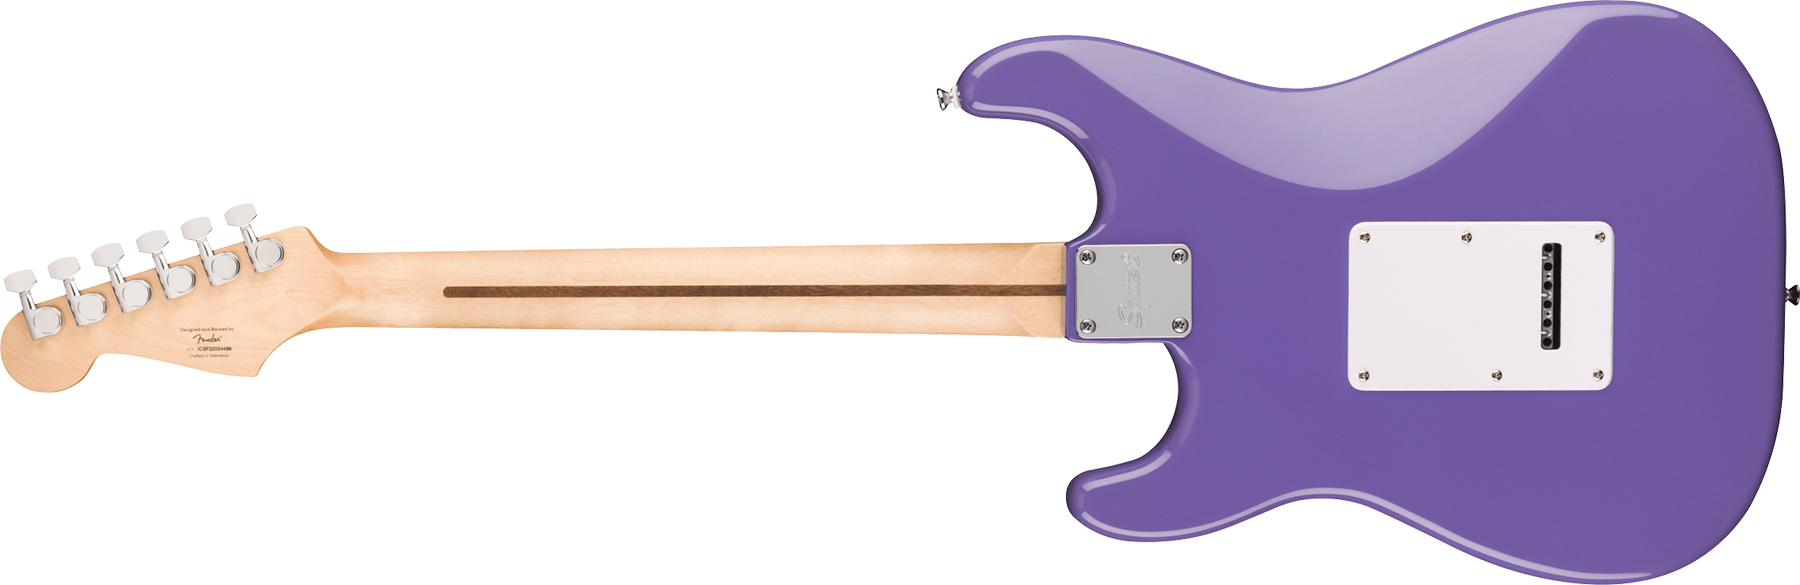 Squier Strat Sonic 3s Trem Lau - Ultraviolet - Str shape electric guitar - Variation 1